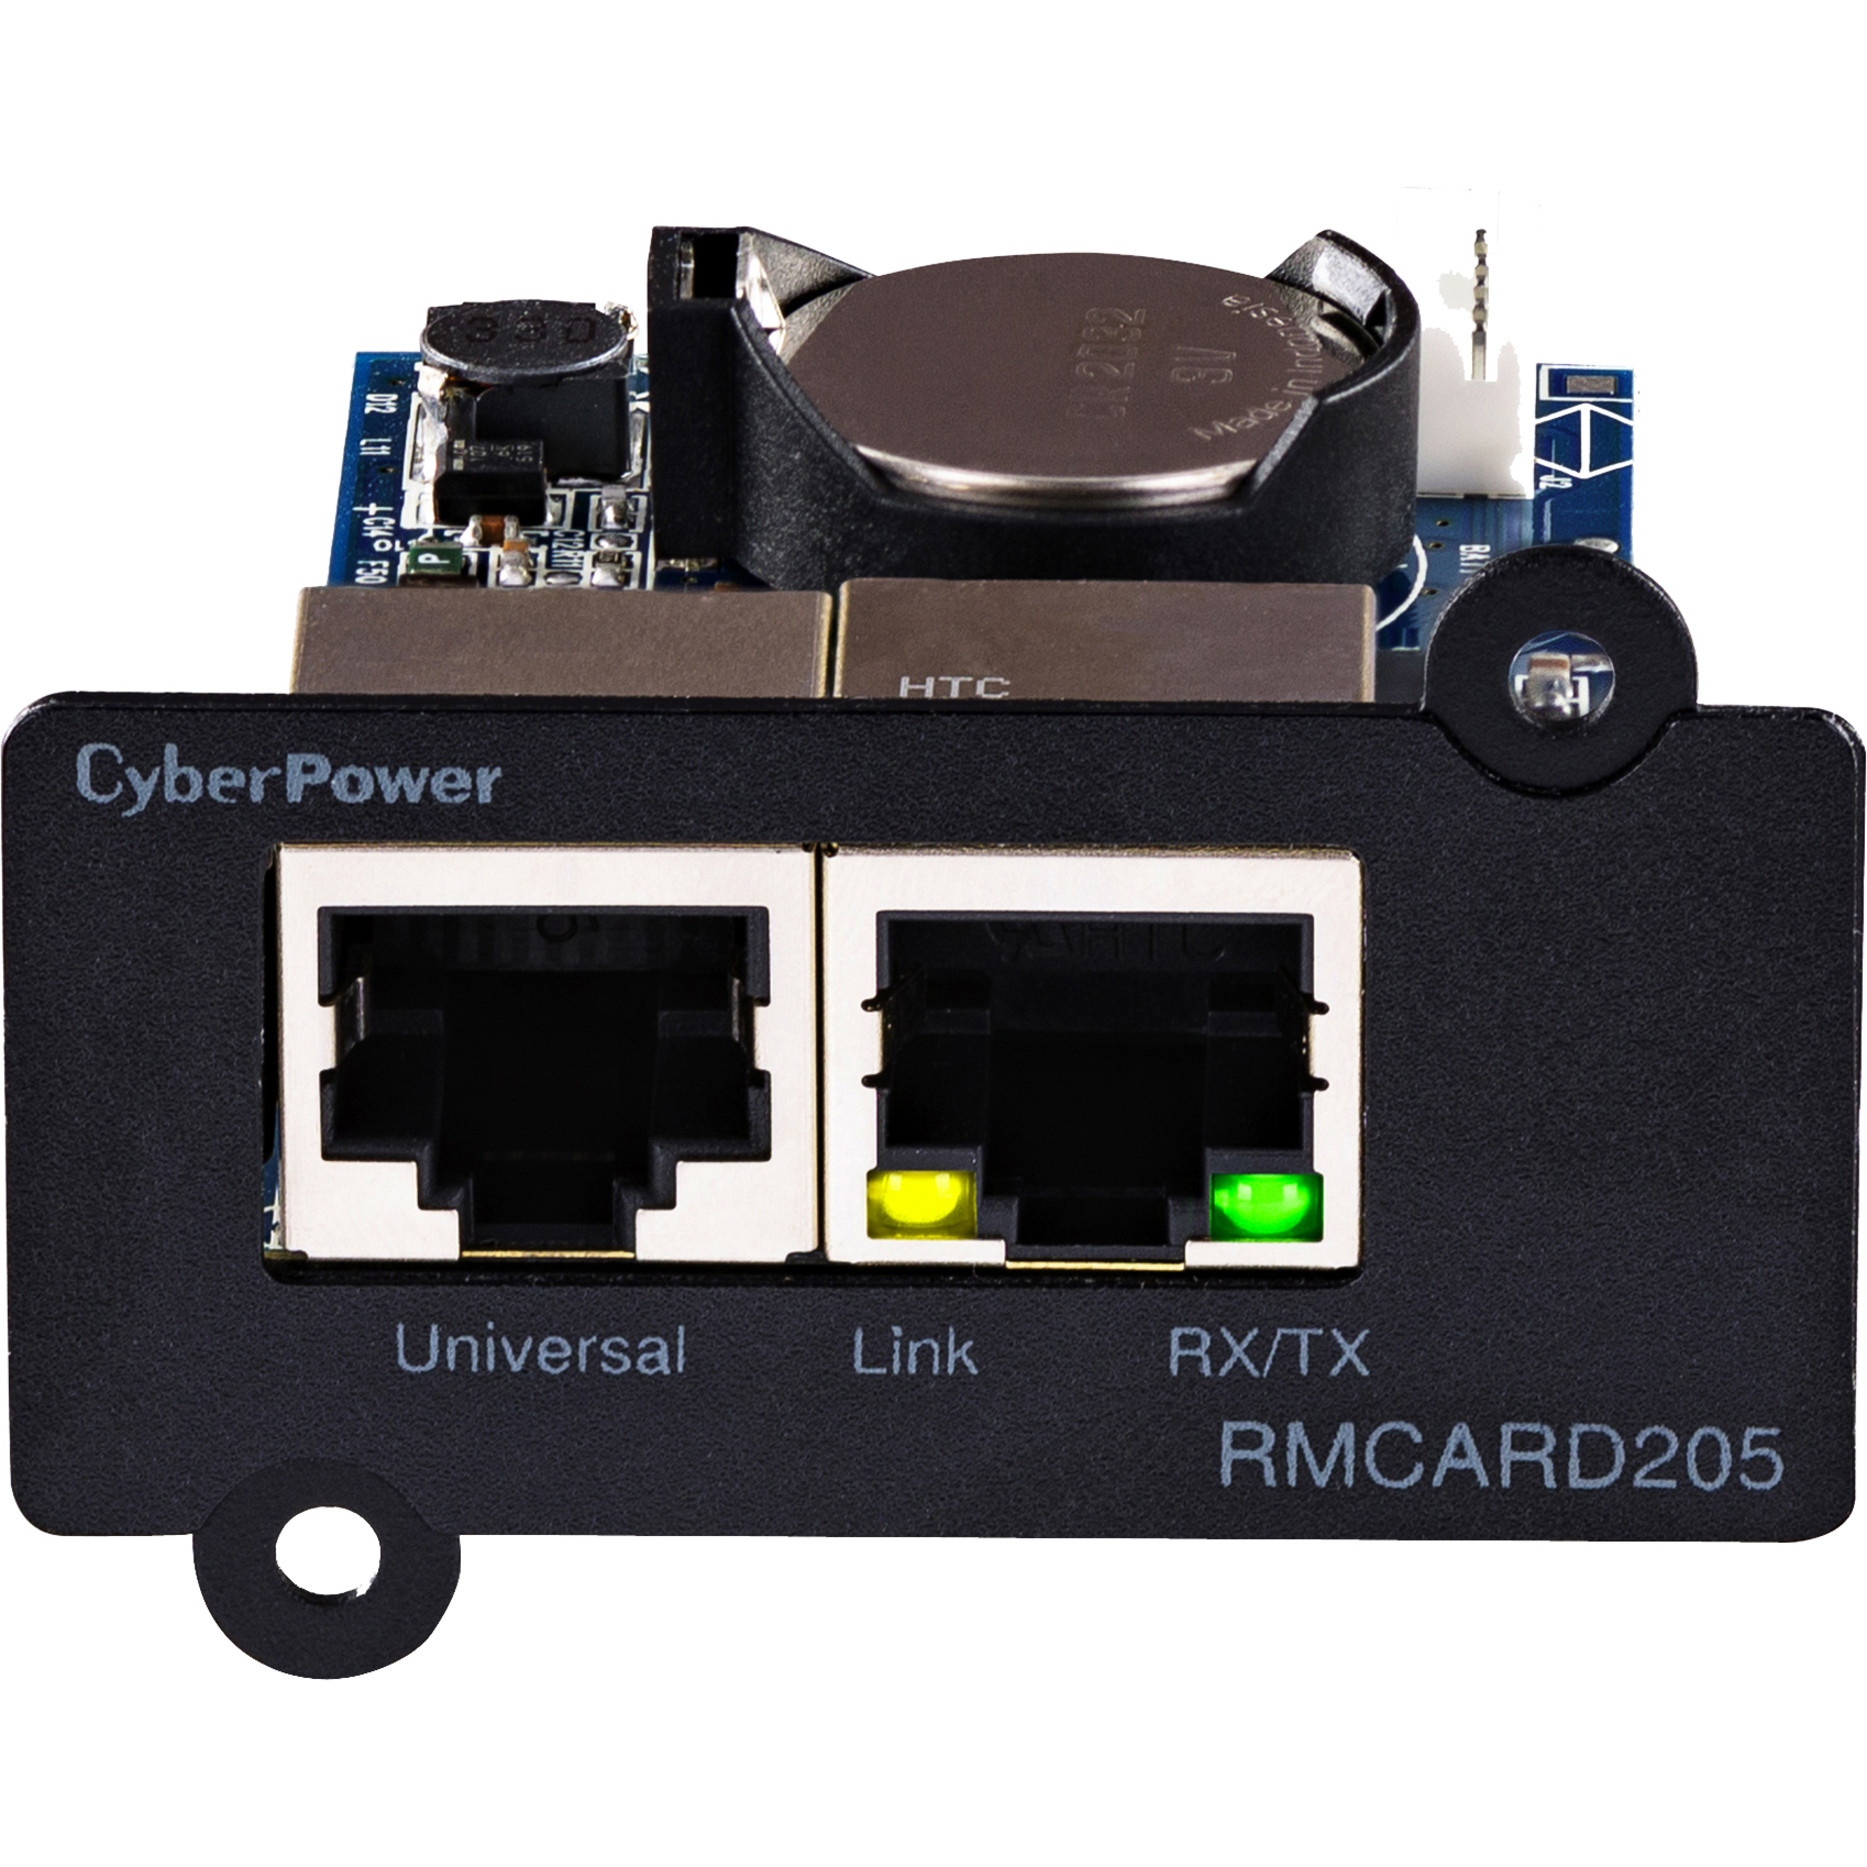 Cyber Power RMCARD205 Remote Management CardBlack  WarrantyHardware & Accessories RMCARD205